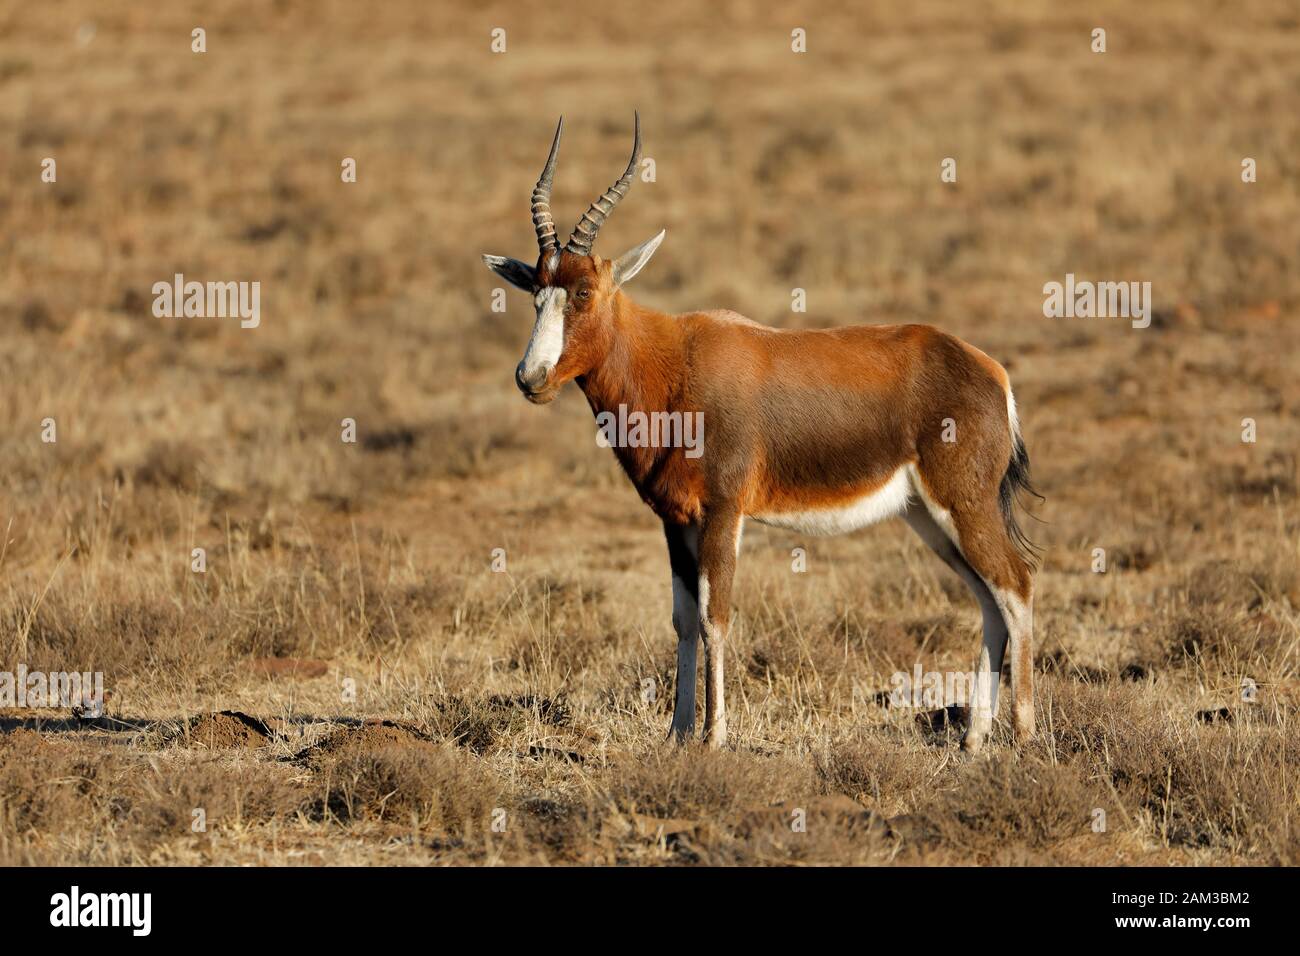 A blesbok antelope (Damaliscus pygargus) standing in grassland, South Africa Stock Photo